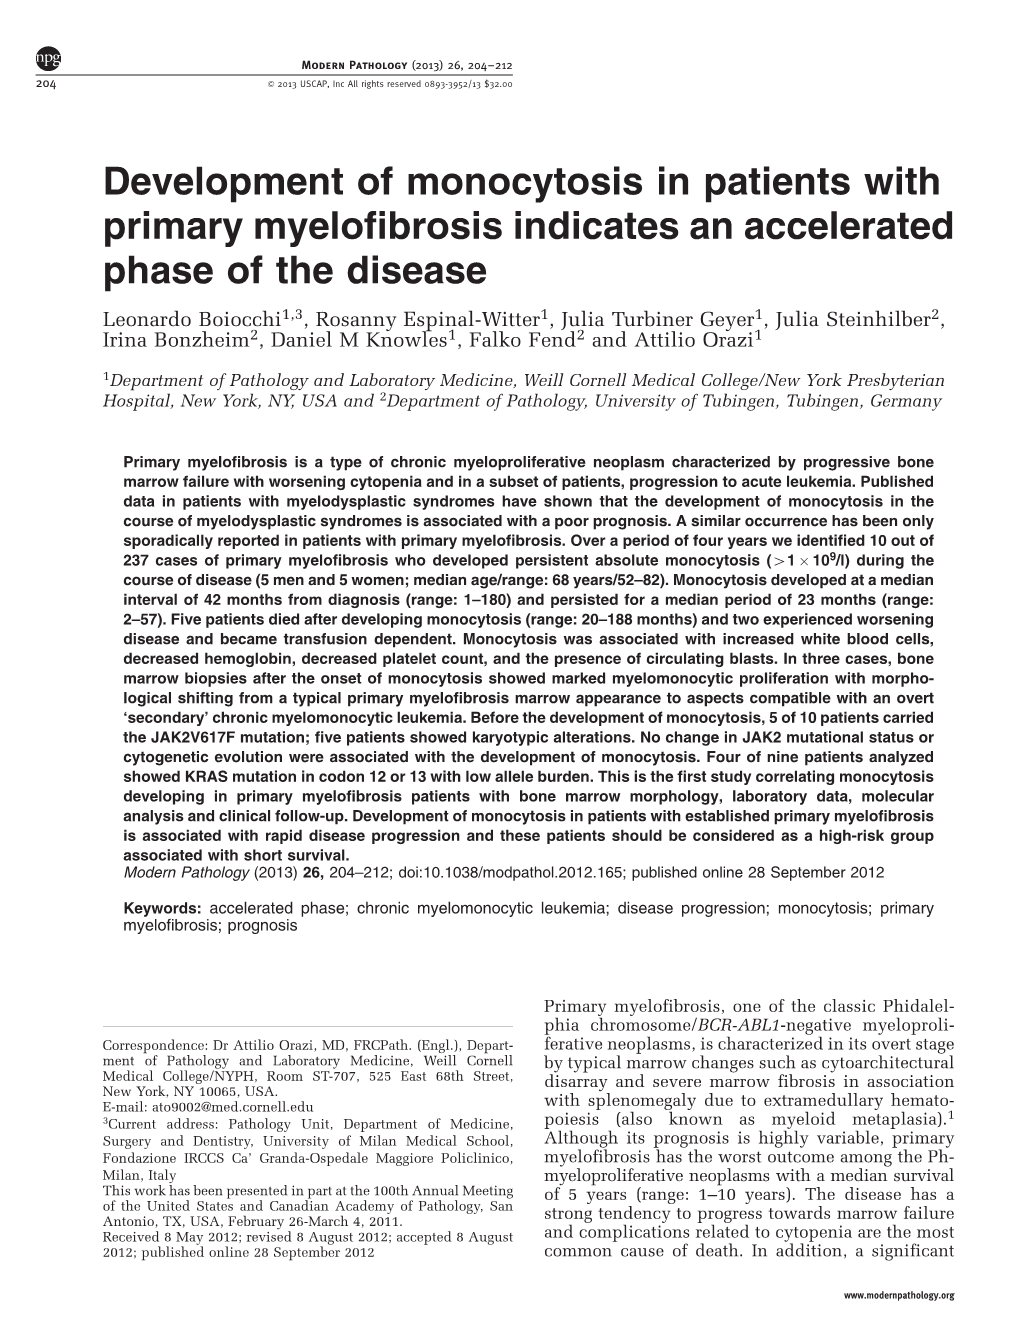 Development of Monocytosis in Patients with Primary Myelofibrosis